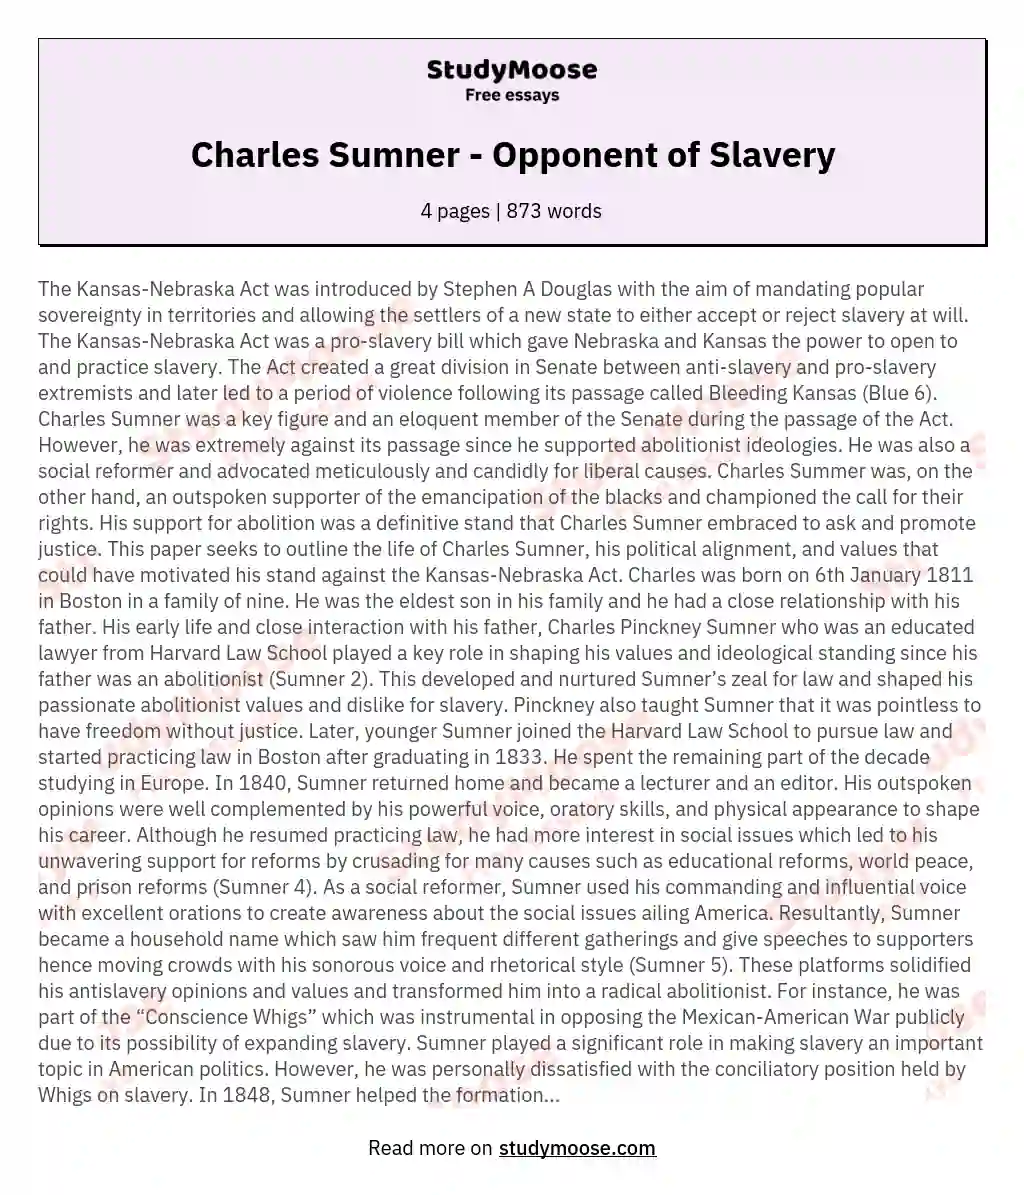 Charles Sumner - Opponent of Slavery essay